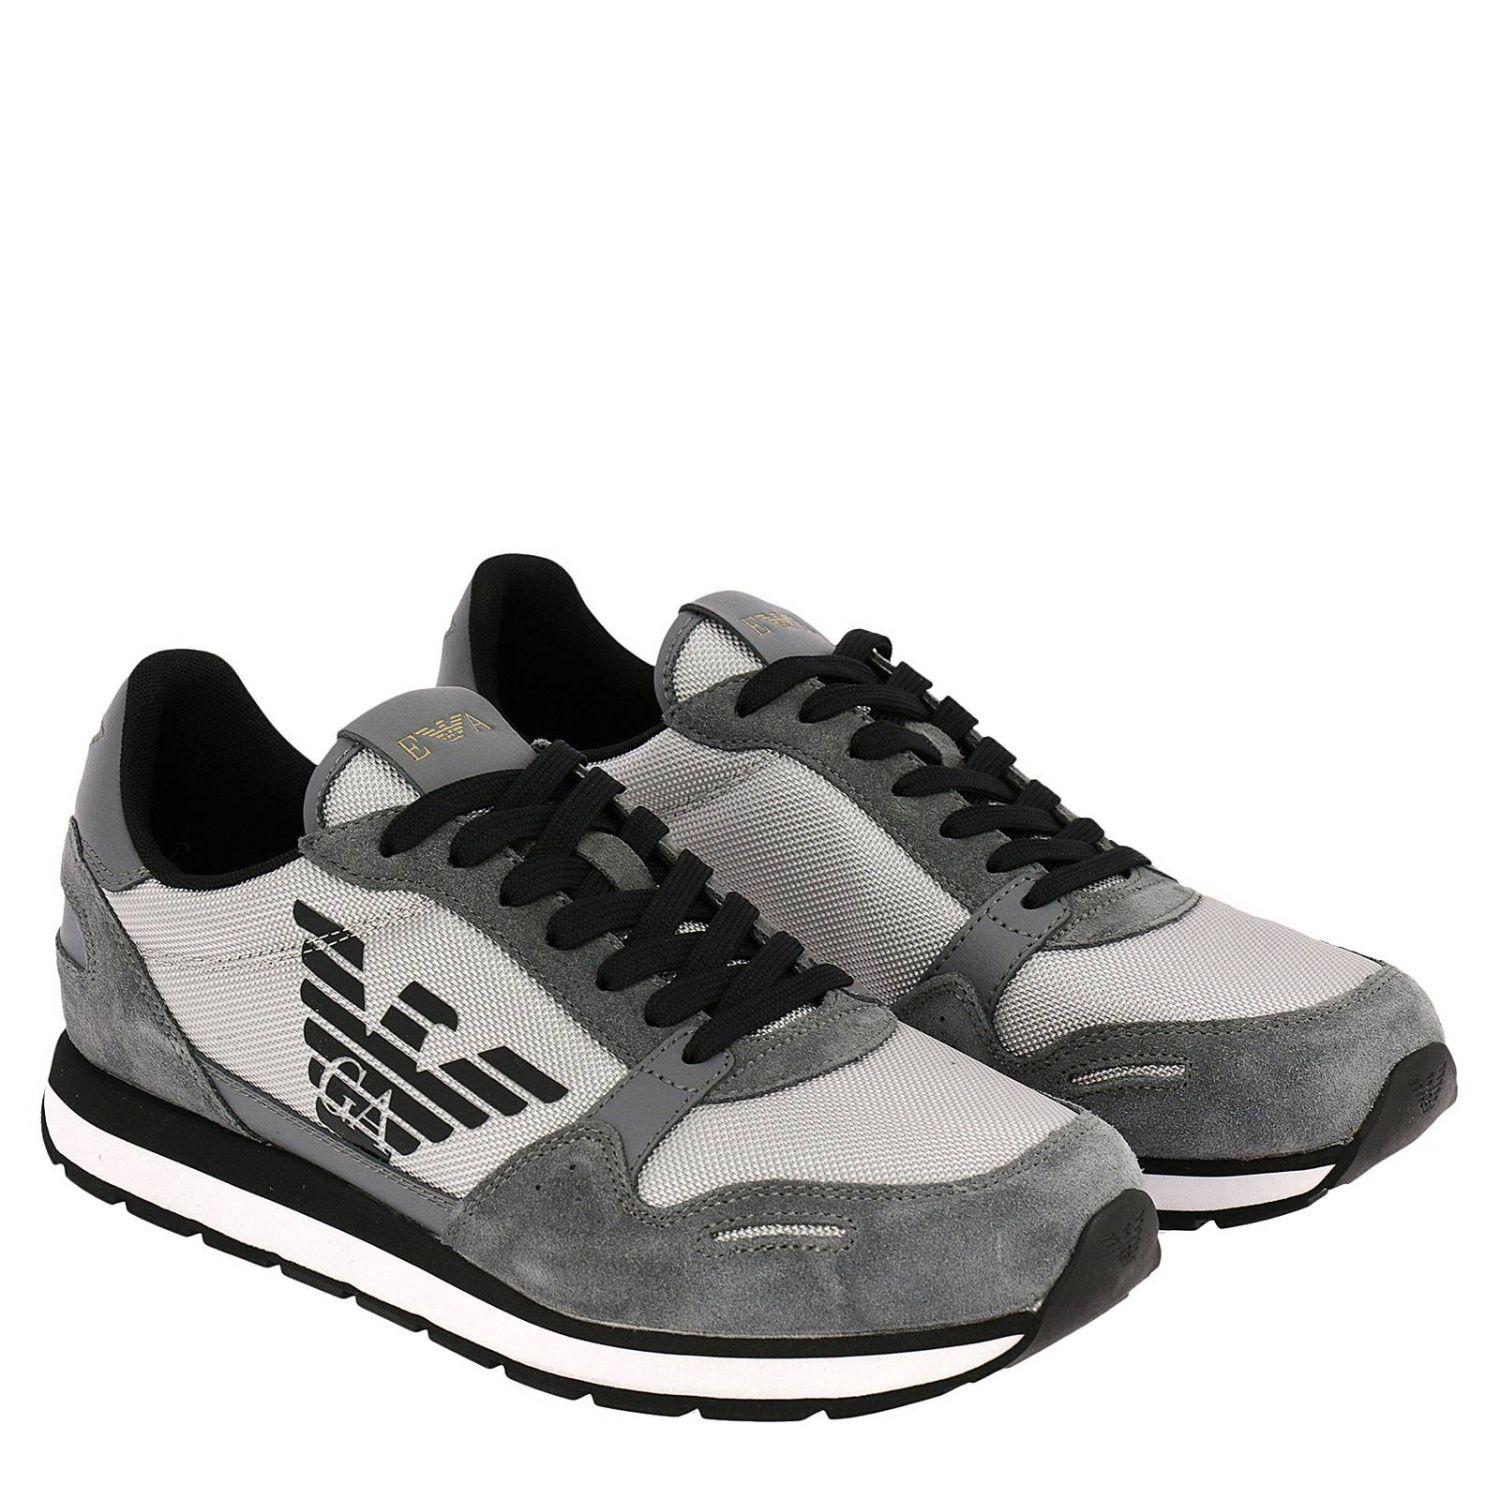 Emporio Armani Suede Shoes For Men in Grey (Grey) for Men - Lyst